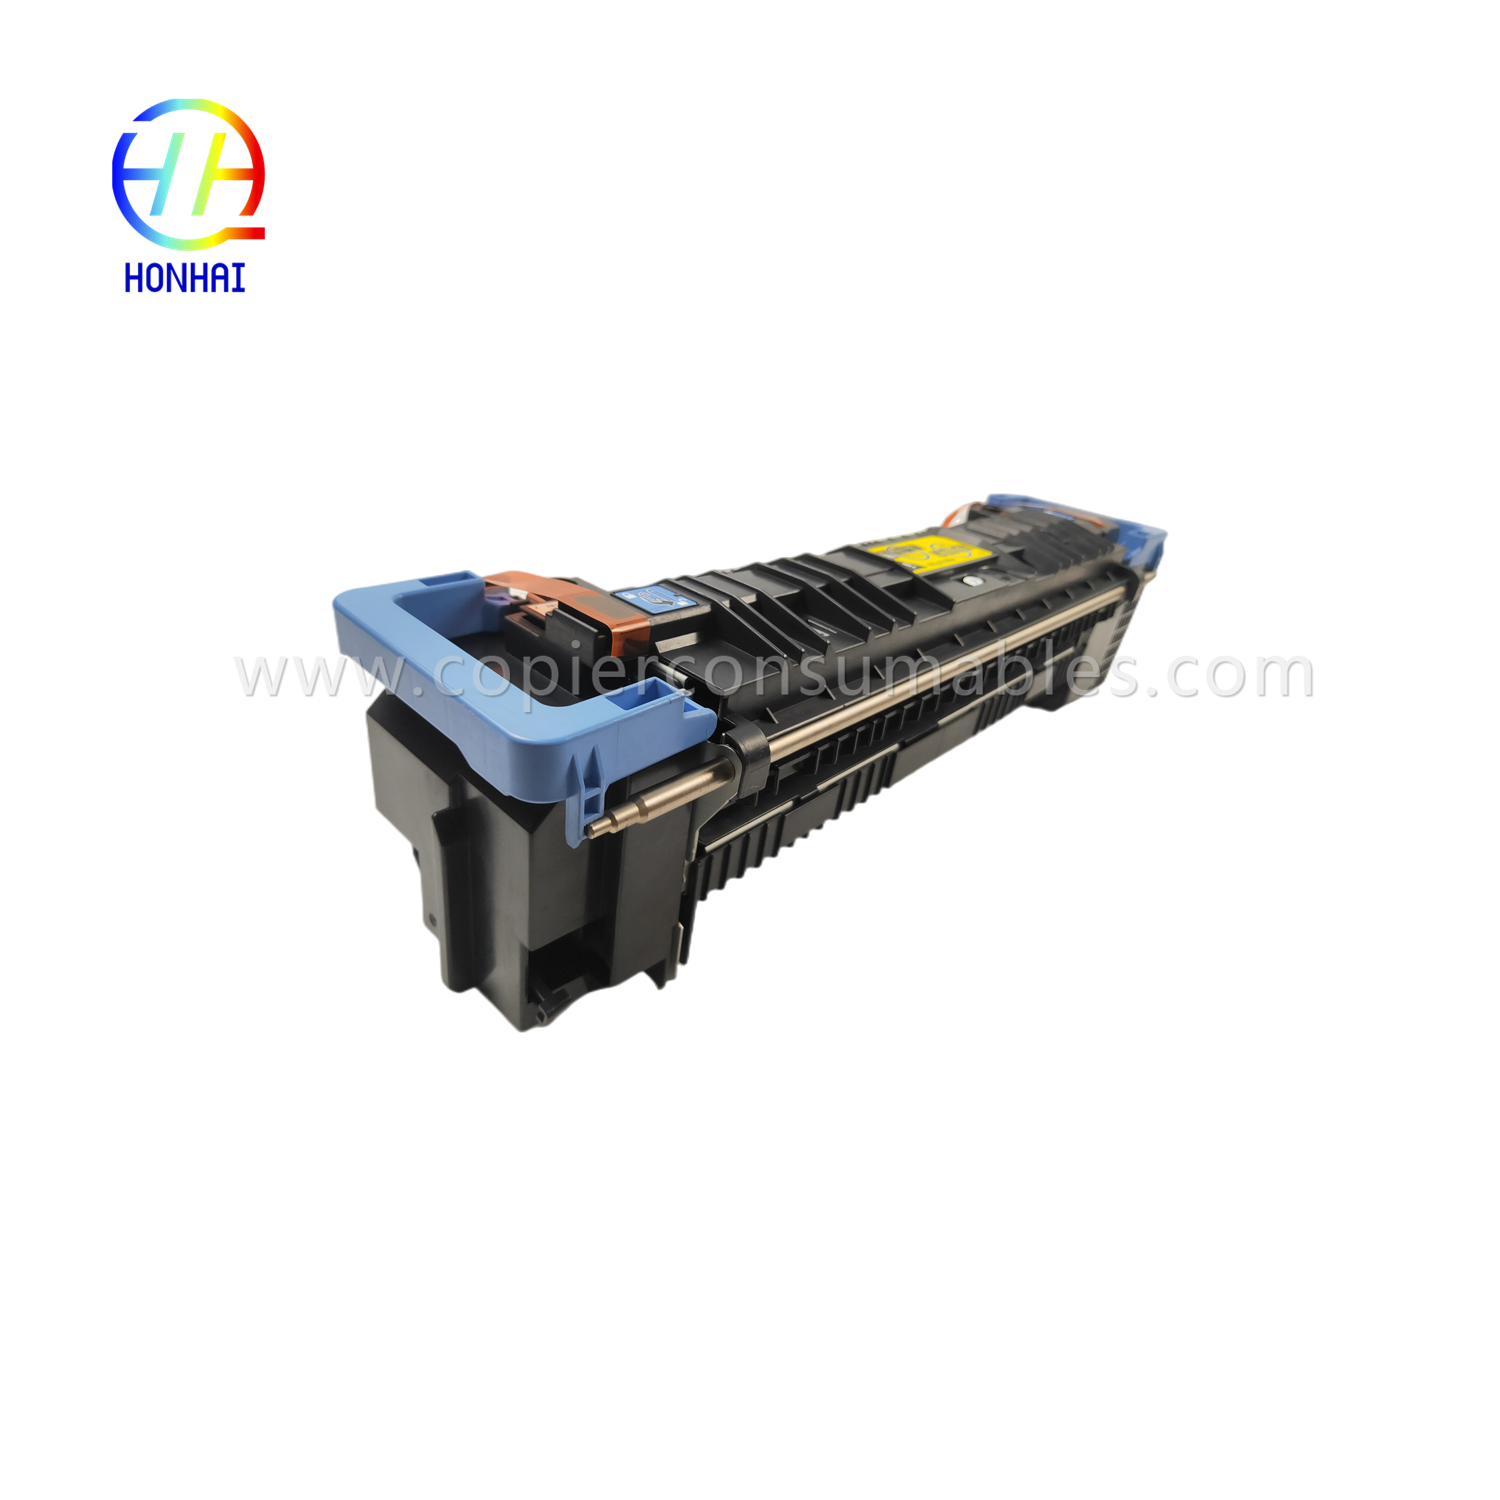 https://c585.goodao.net/fuser-assembly-unit-for-hp-m855-m880-m855dn-m855xh-m880z-m880z-c1n54-67901-c1n58-67901-fising-heating-fising-heating